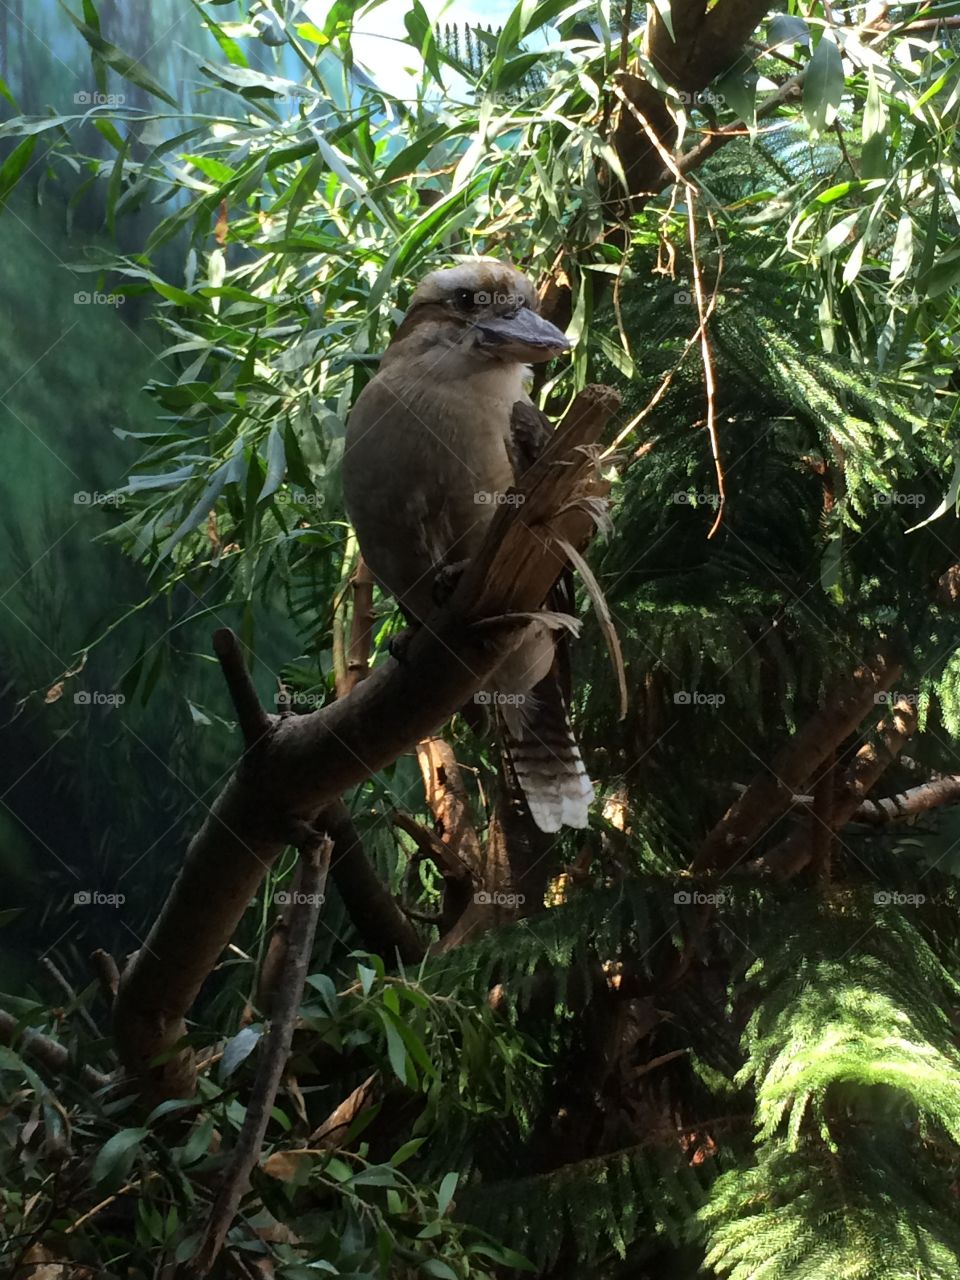 Bird from Woodland Park Zoo 